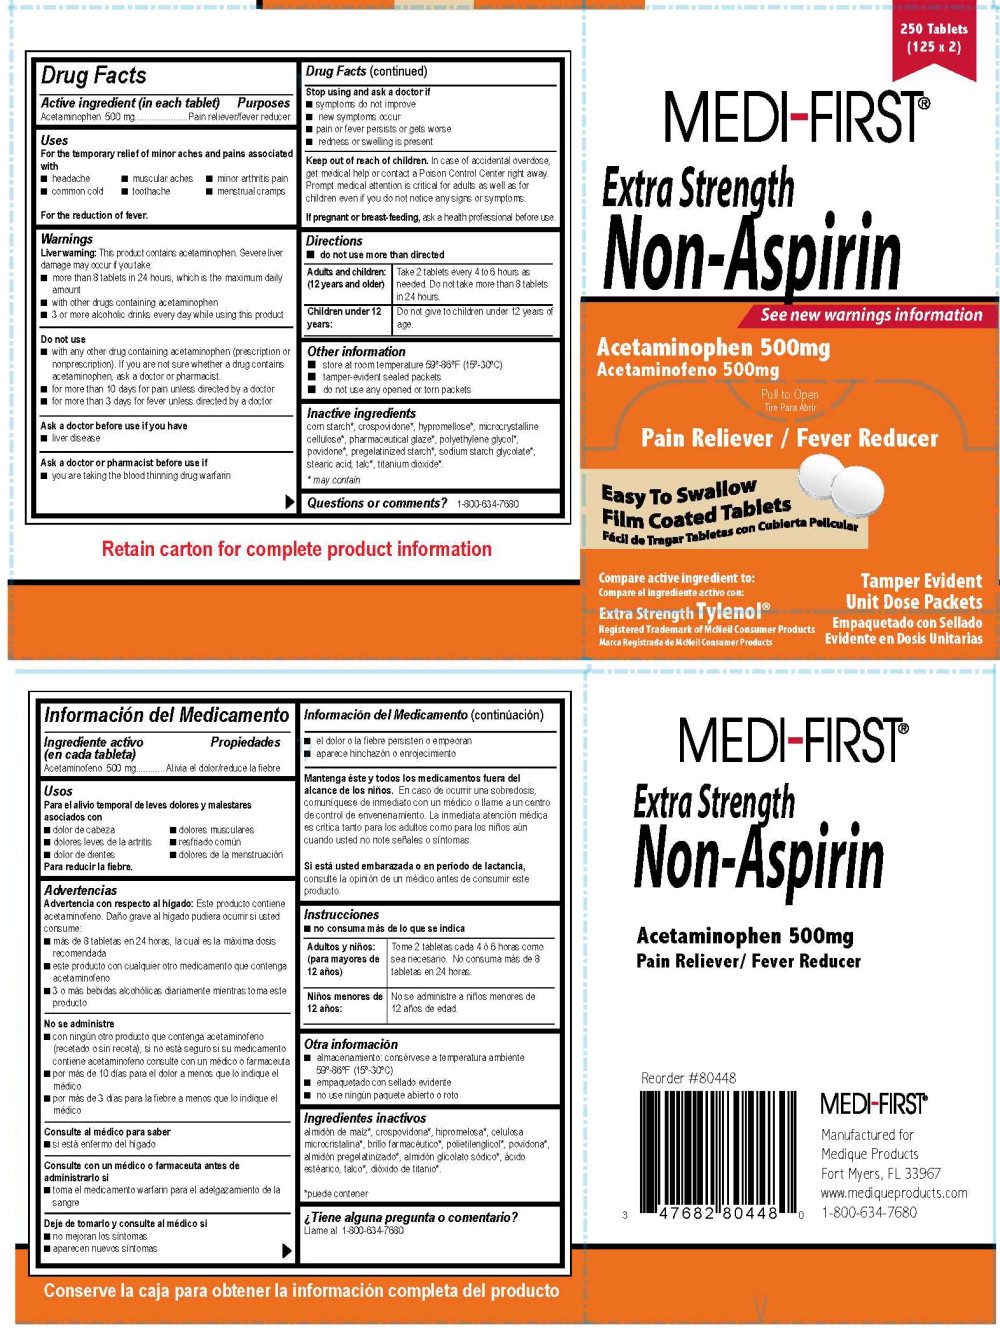 175R MF Non-Aspirin XS 500 mg Label
